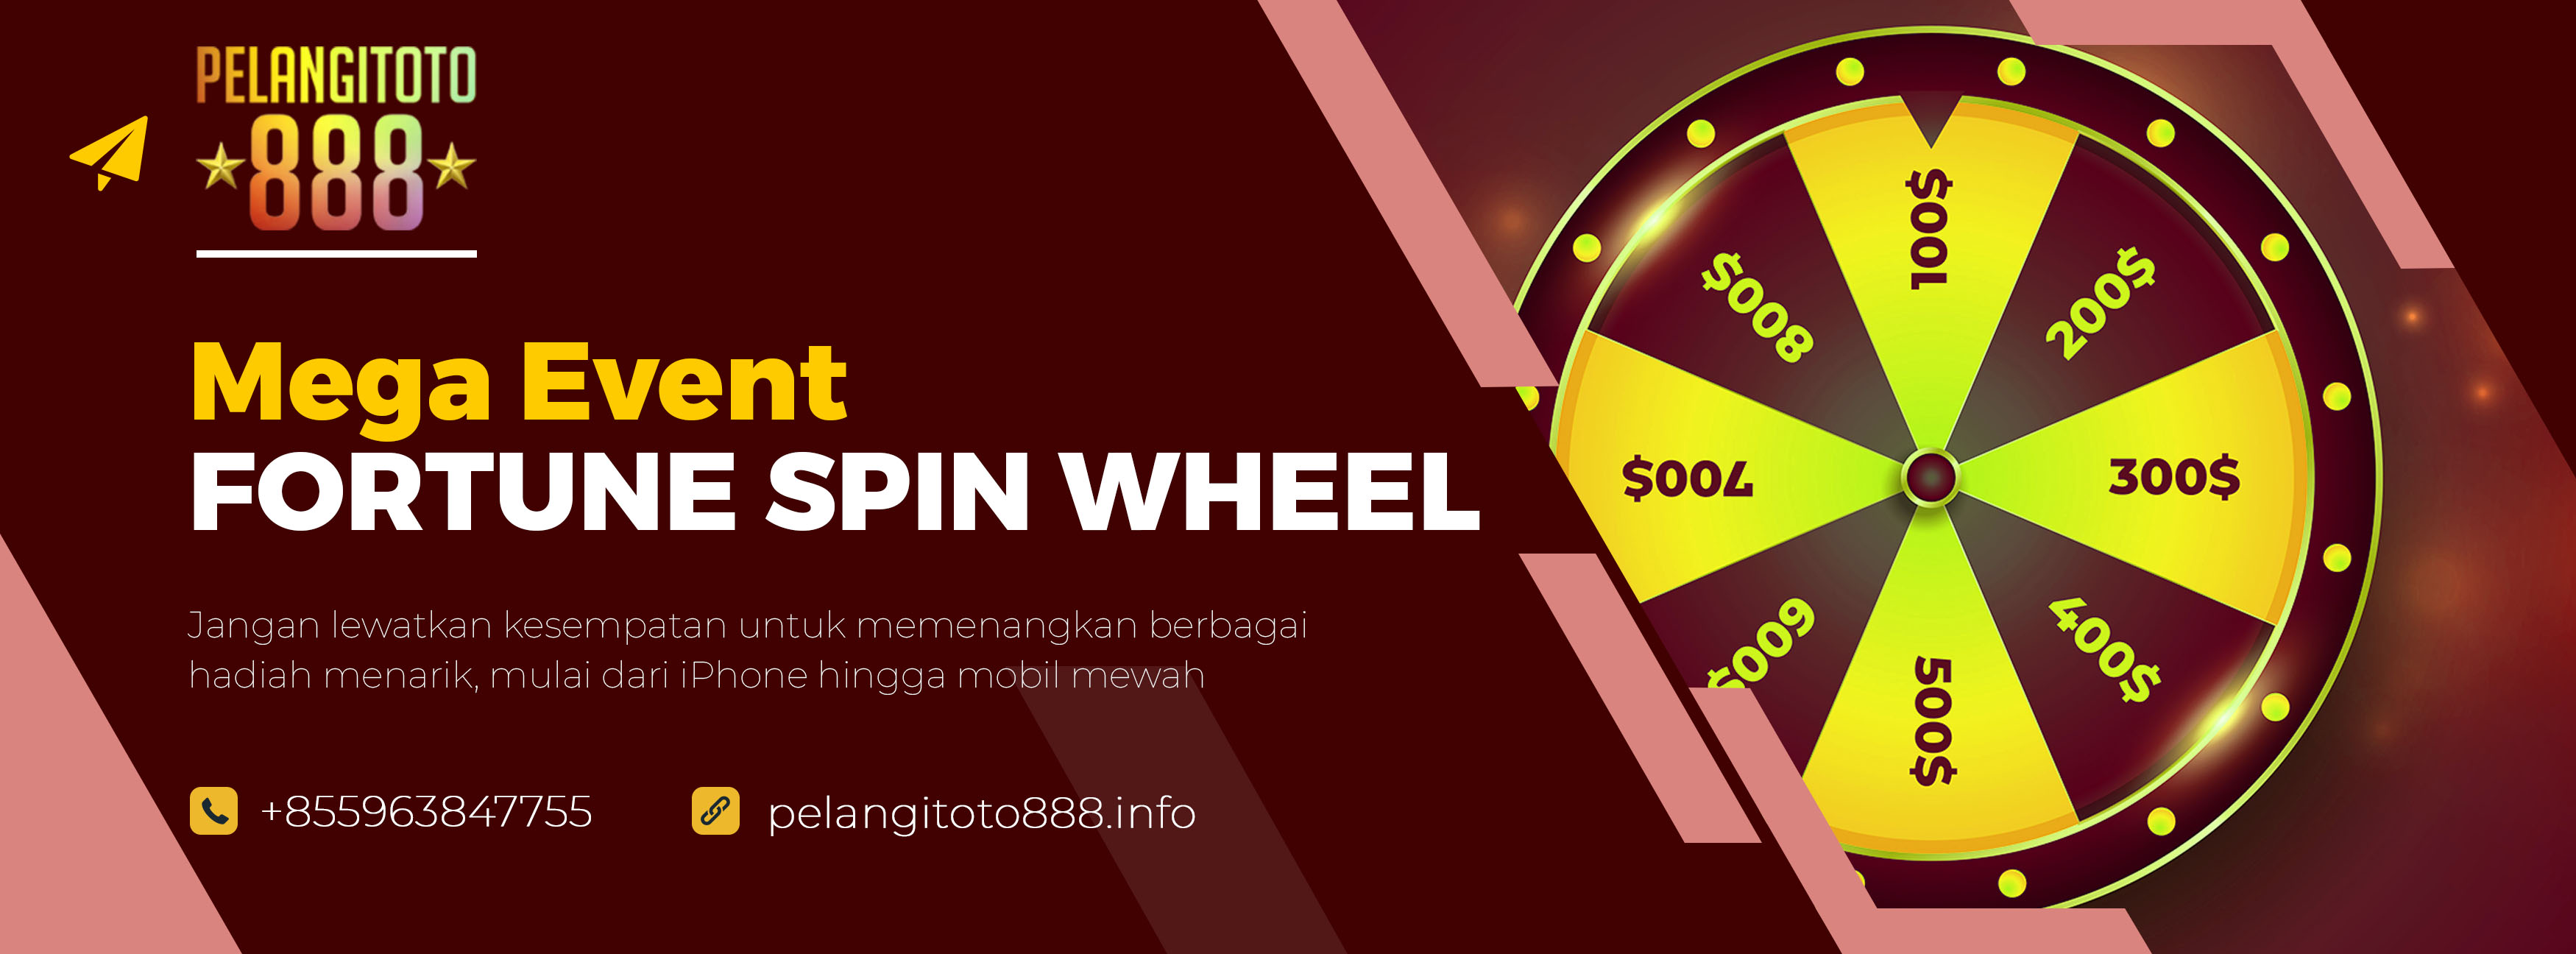 Spin Wheel Pelangitoto888